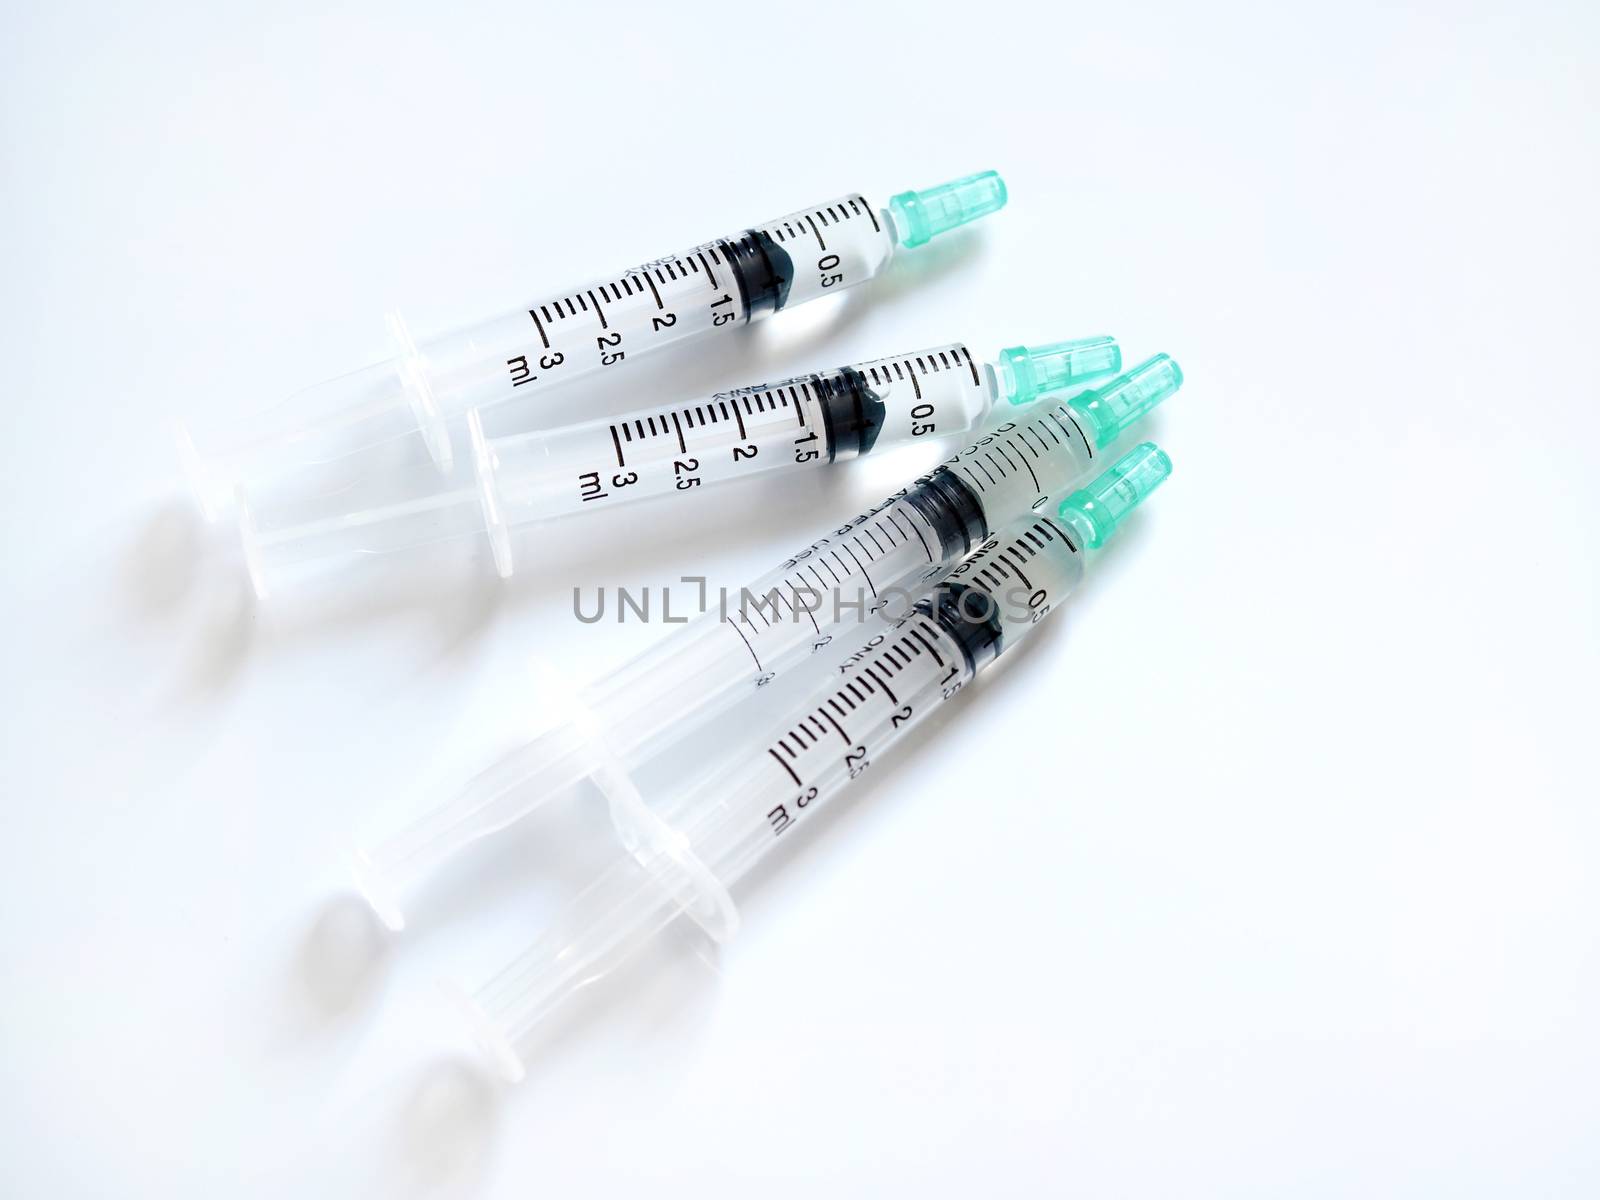 Needle tube, Liquid syringe, Medical equipment for feeding medicine or liquid food.